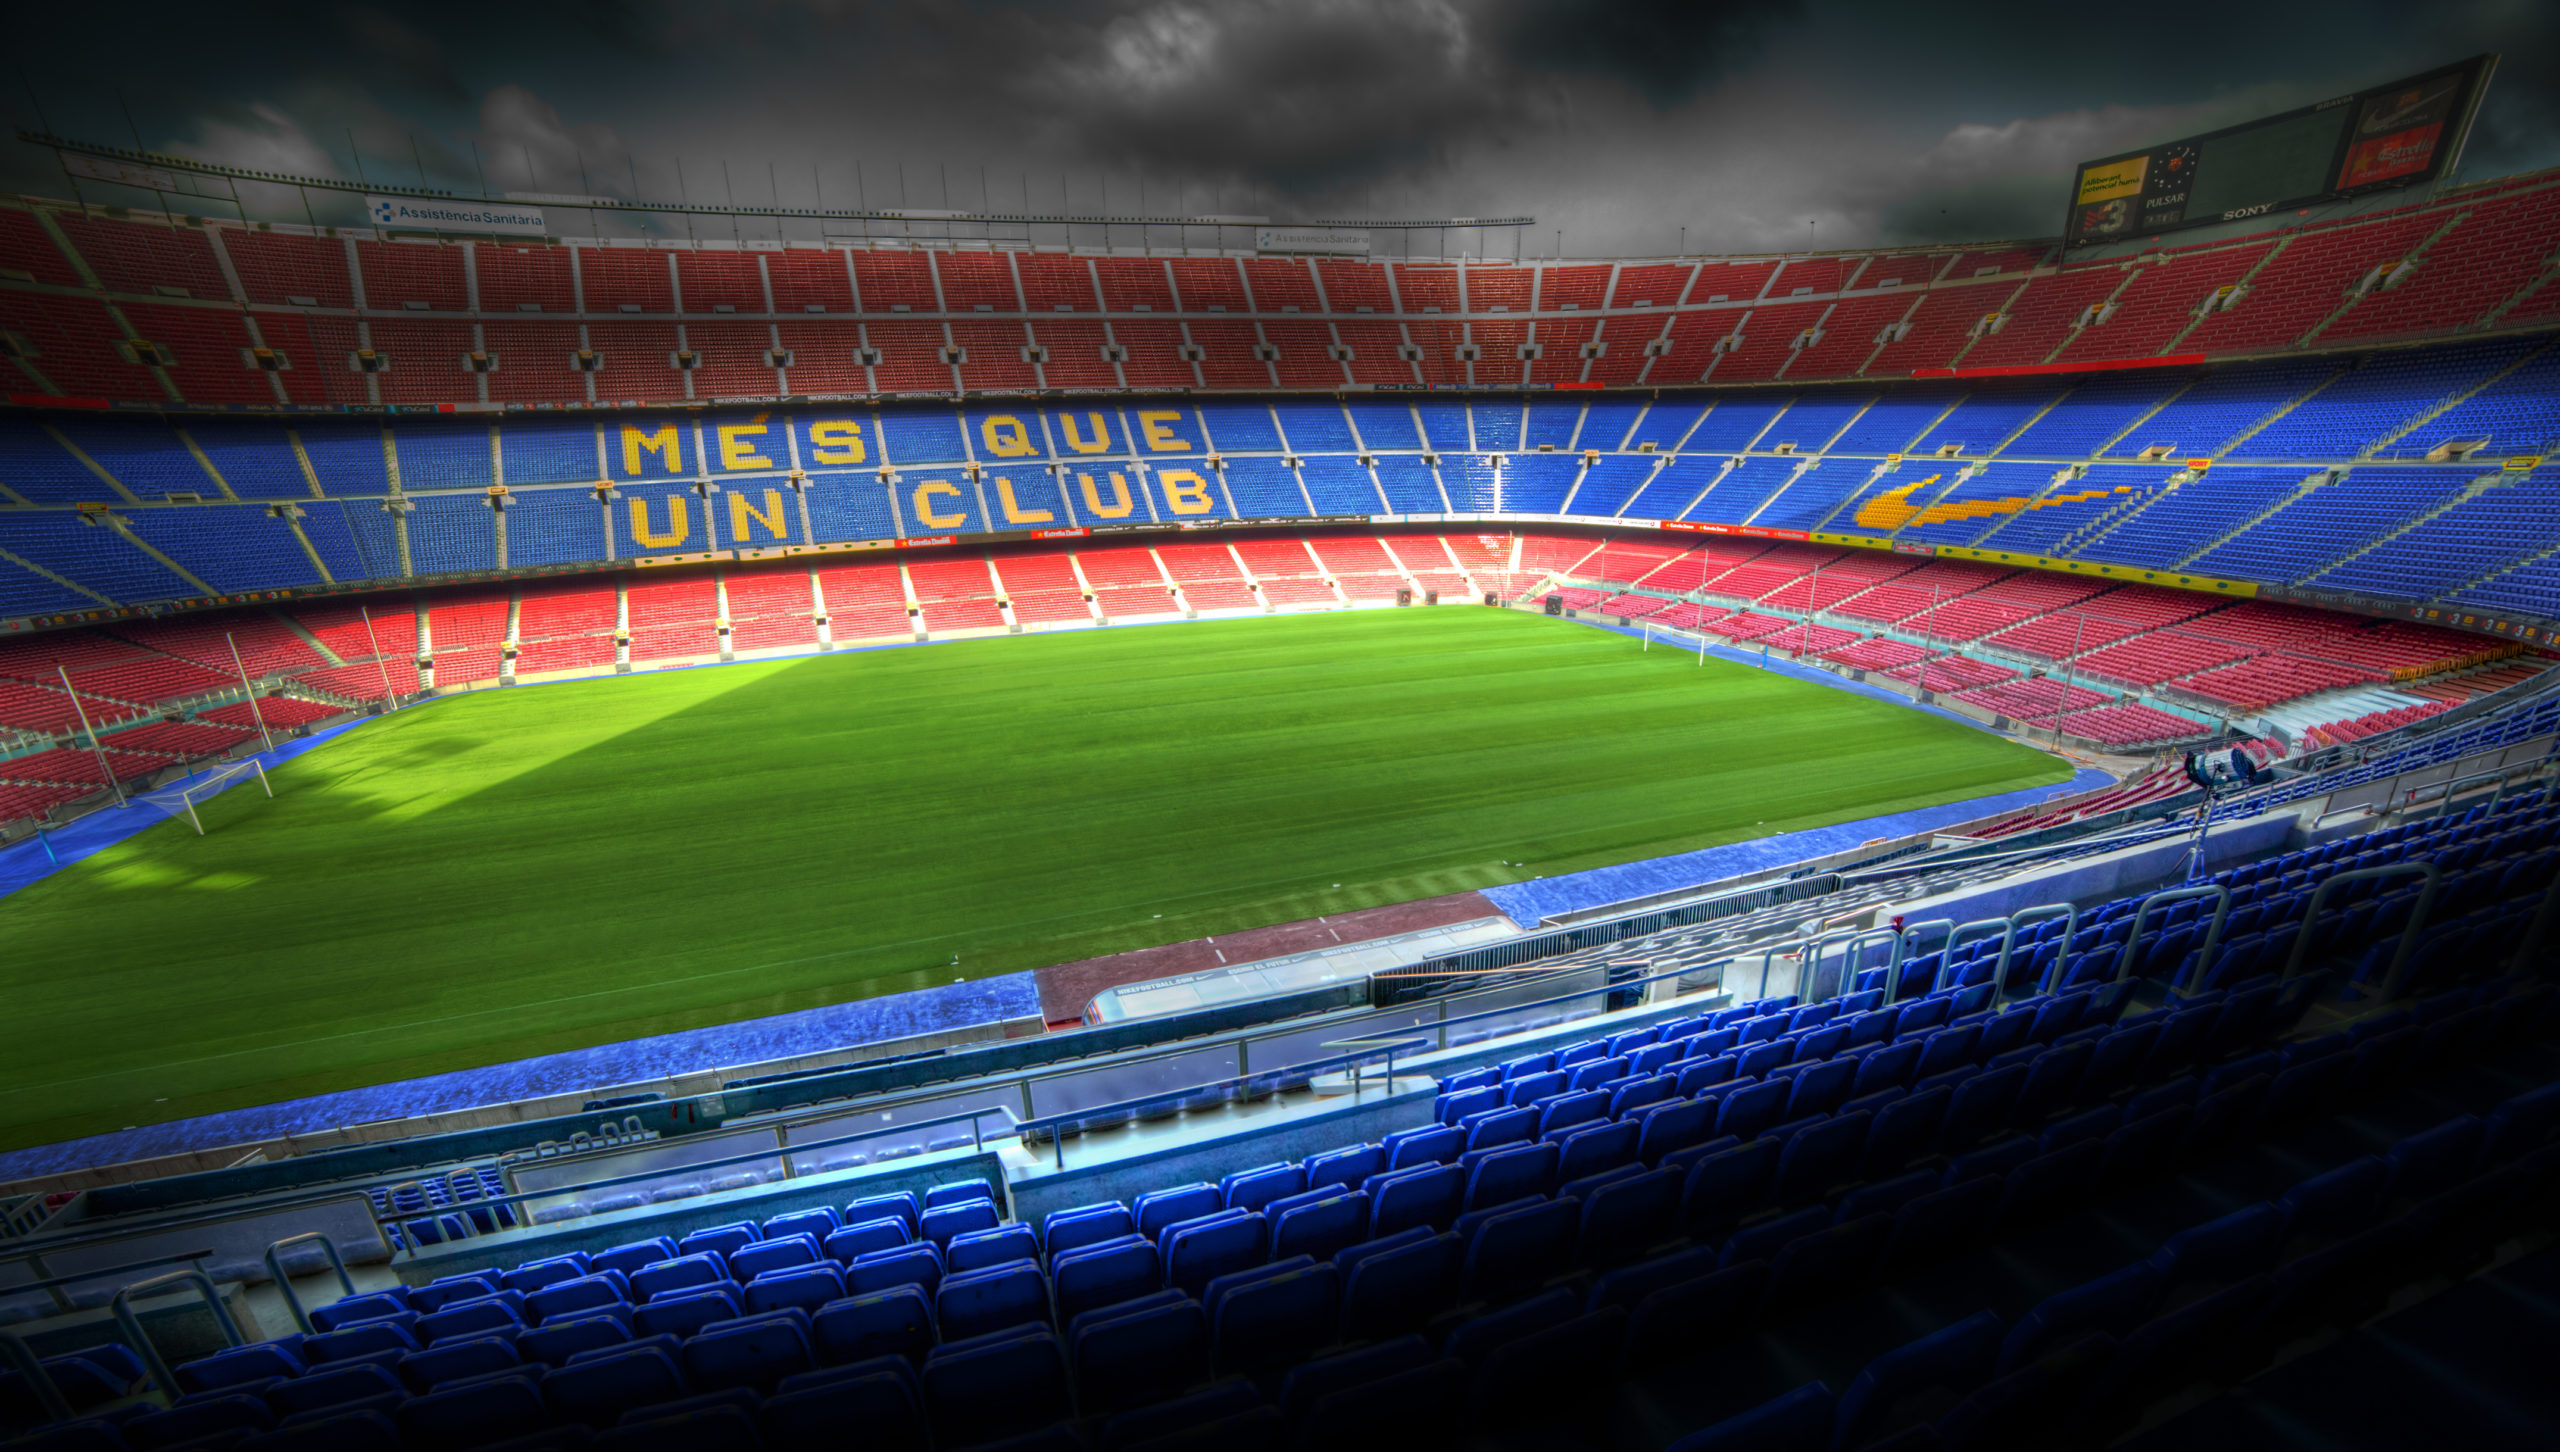 The Camp Nou stadium in Barcelona, Spain